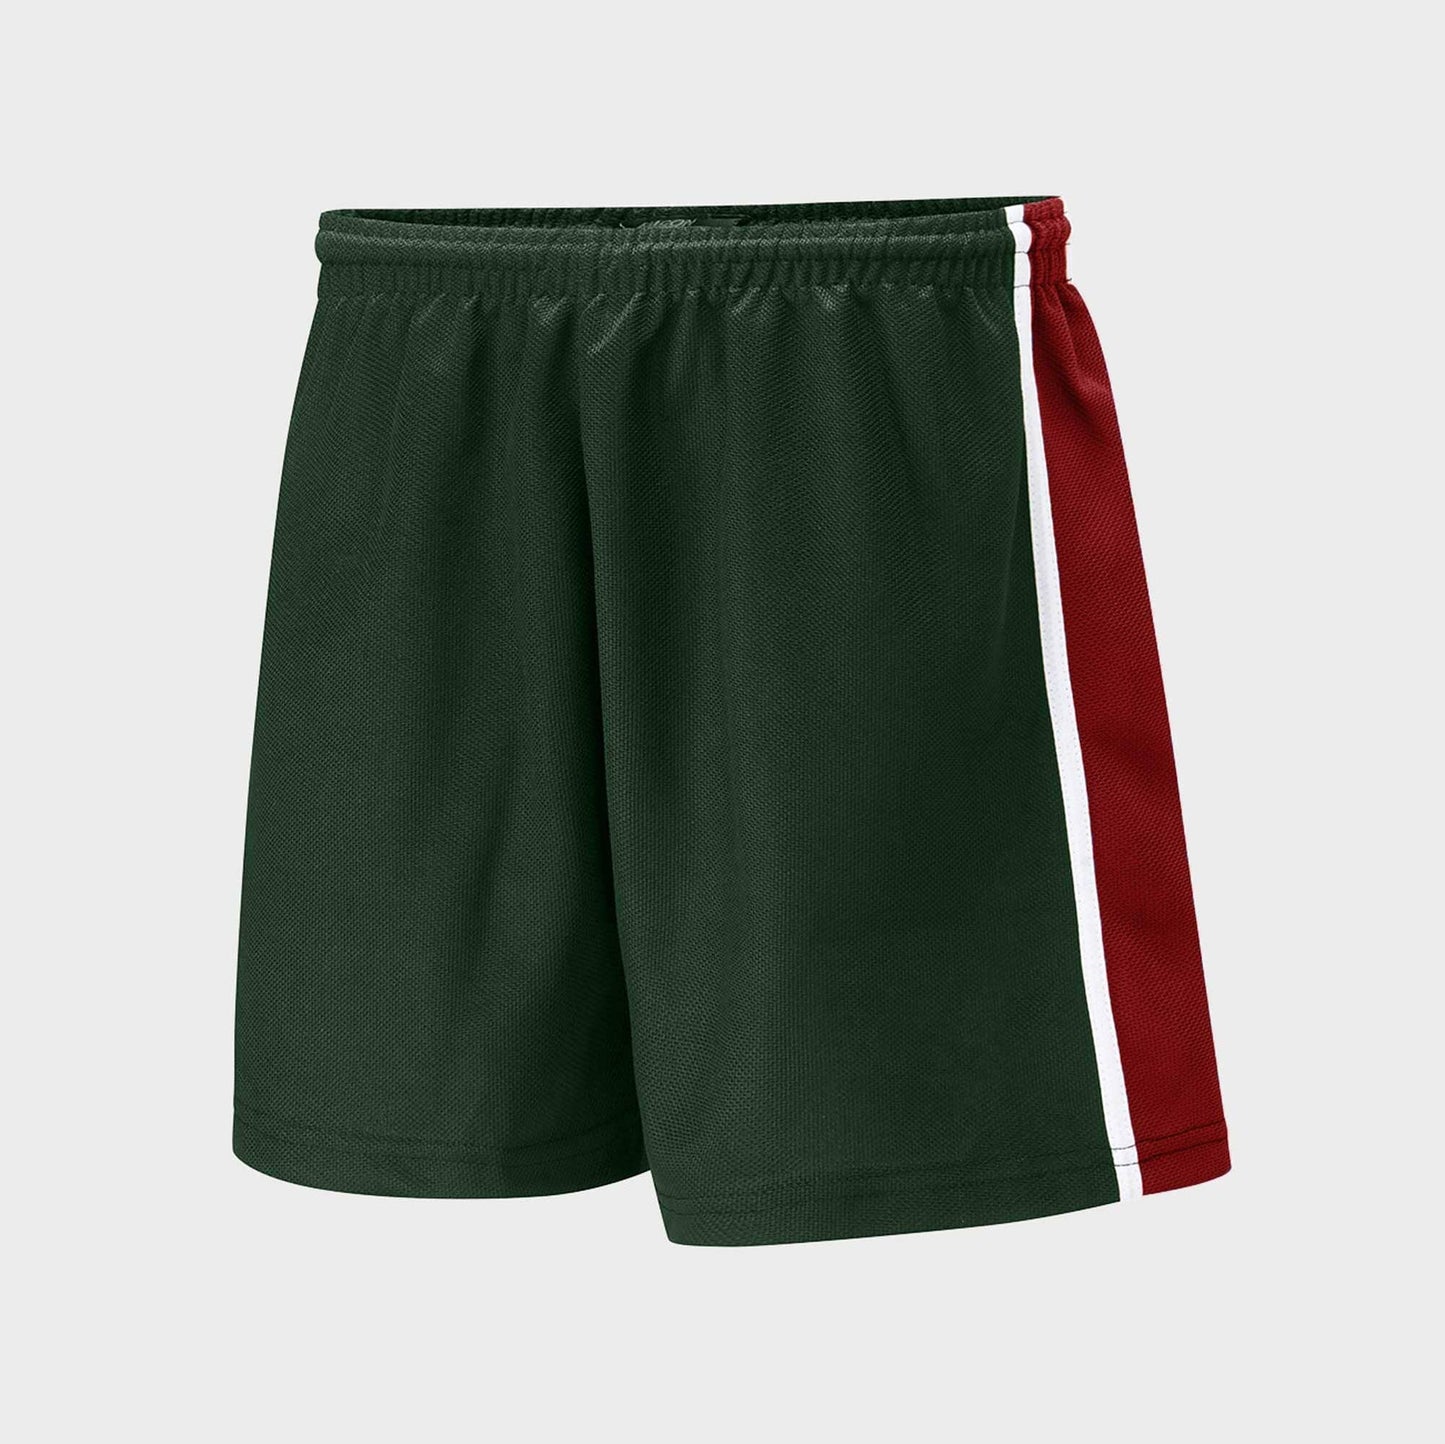 Falcon Men's Activewear Side Panel Shorts Men's Shorts HAS Apparel Bottle Green & Red XS 